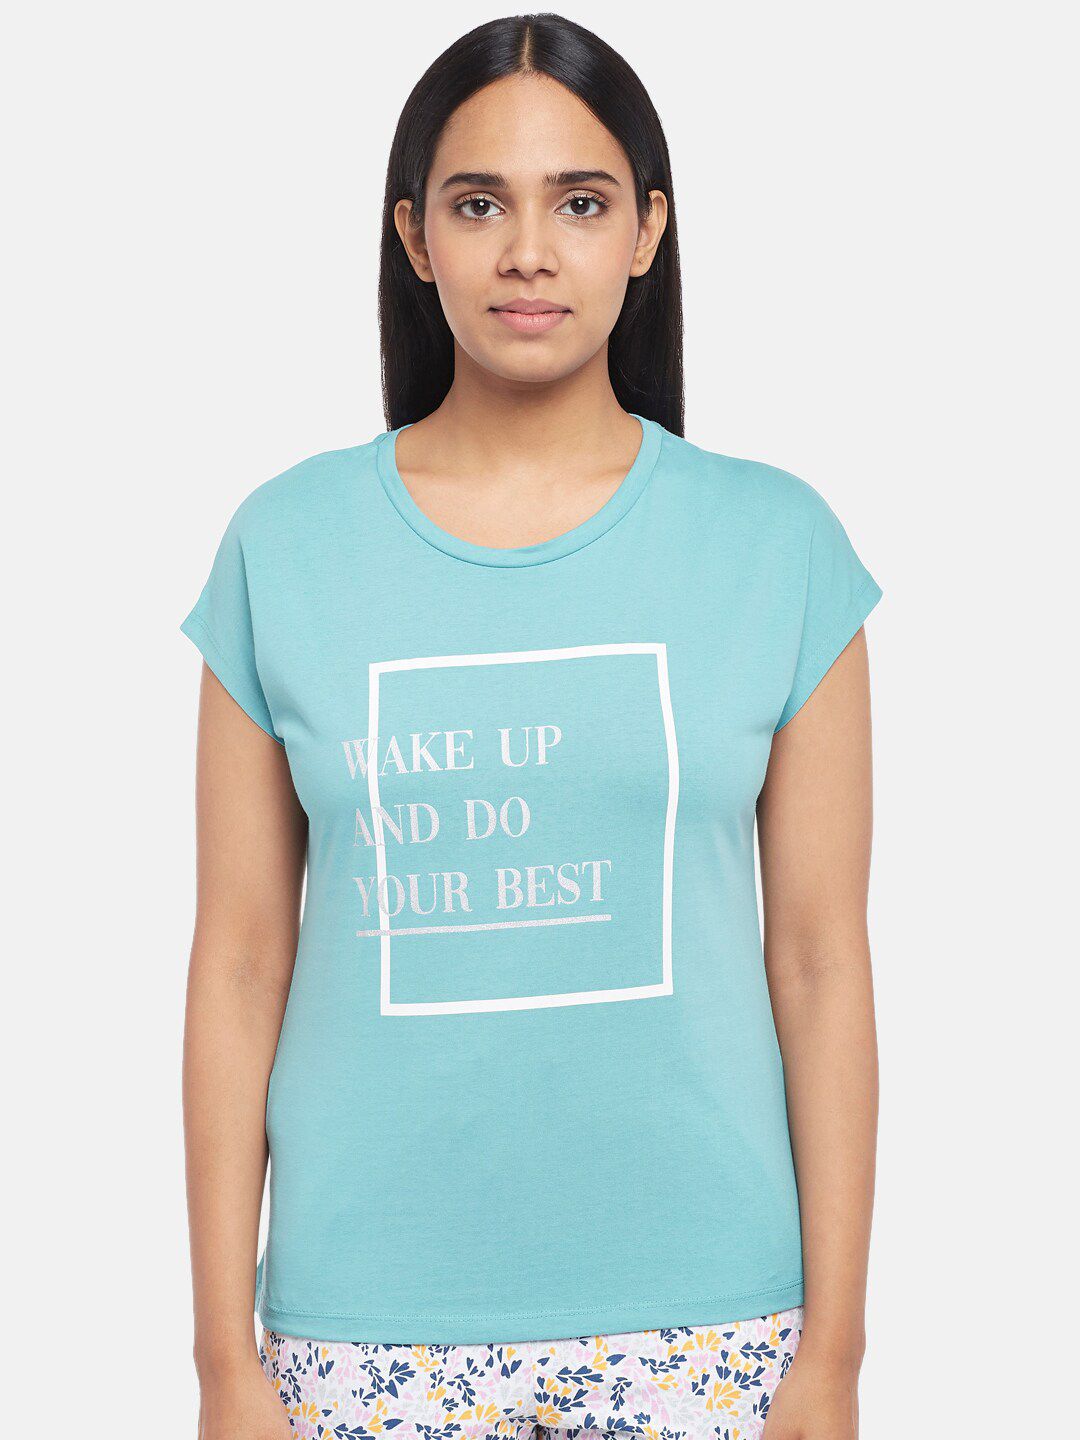 Dreamz by Pantaloons Women Blue & White Printed Regular Lounge T Shirt Price in India